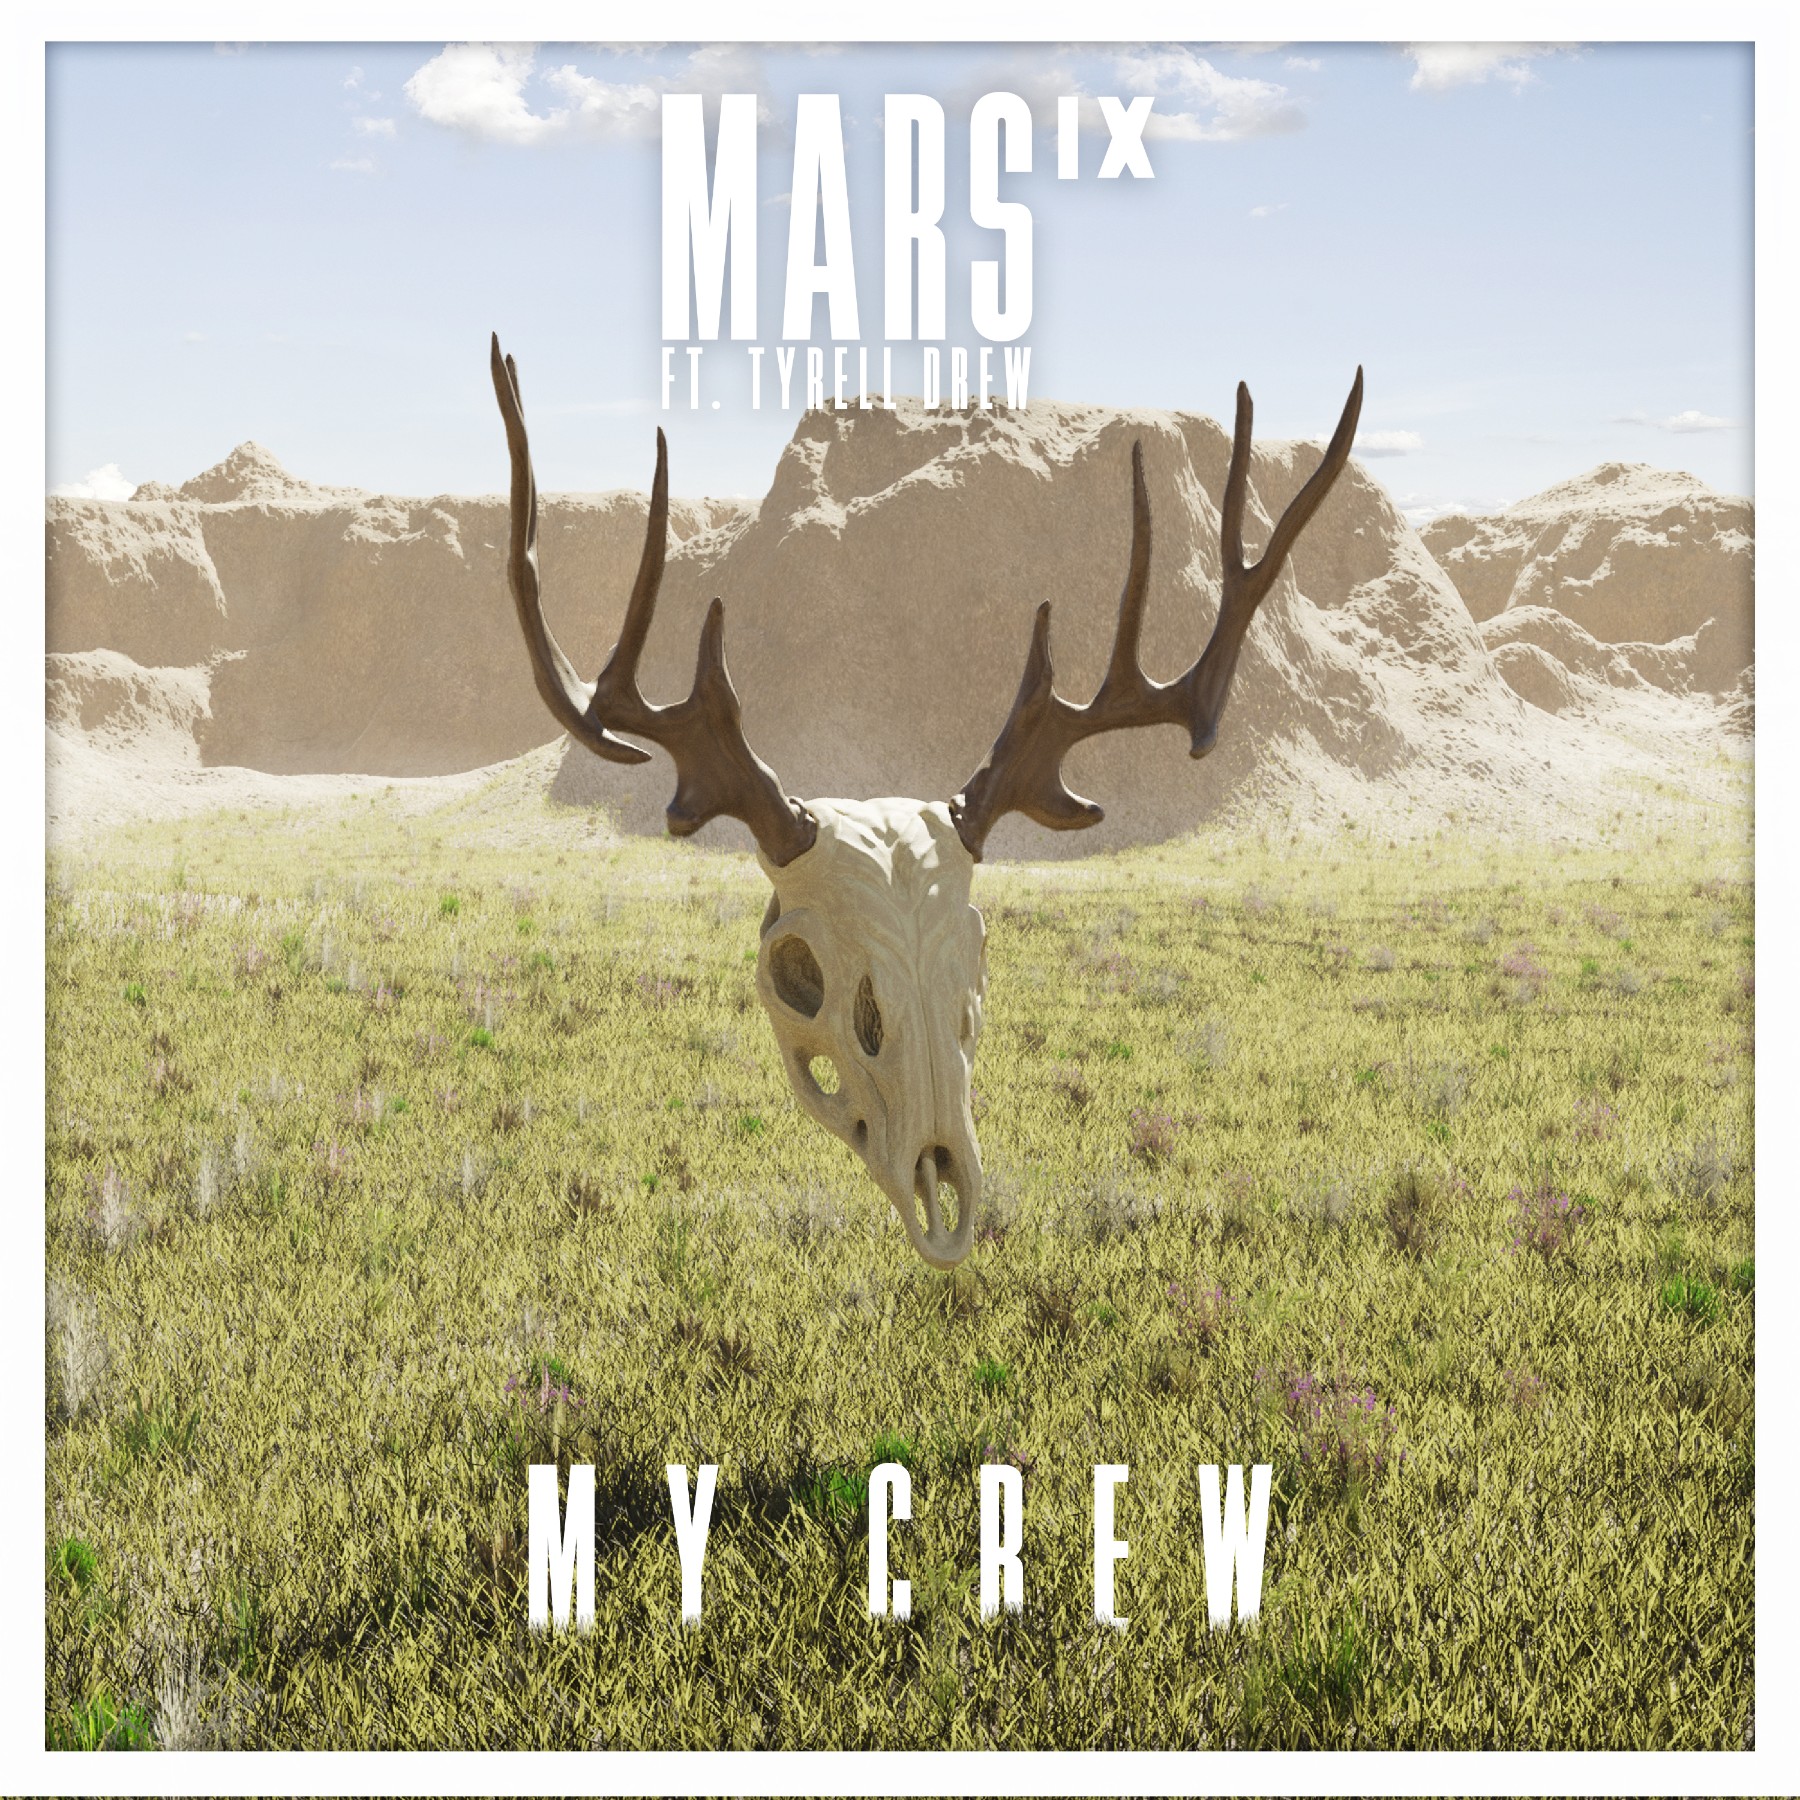 Mars IX Releases “My Crew” Featuring Tyrell Drew